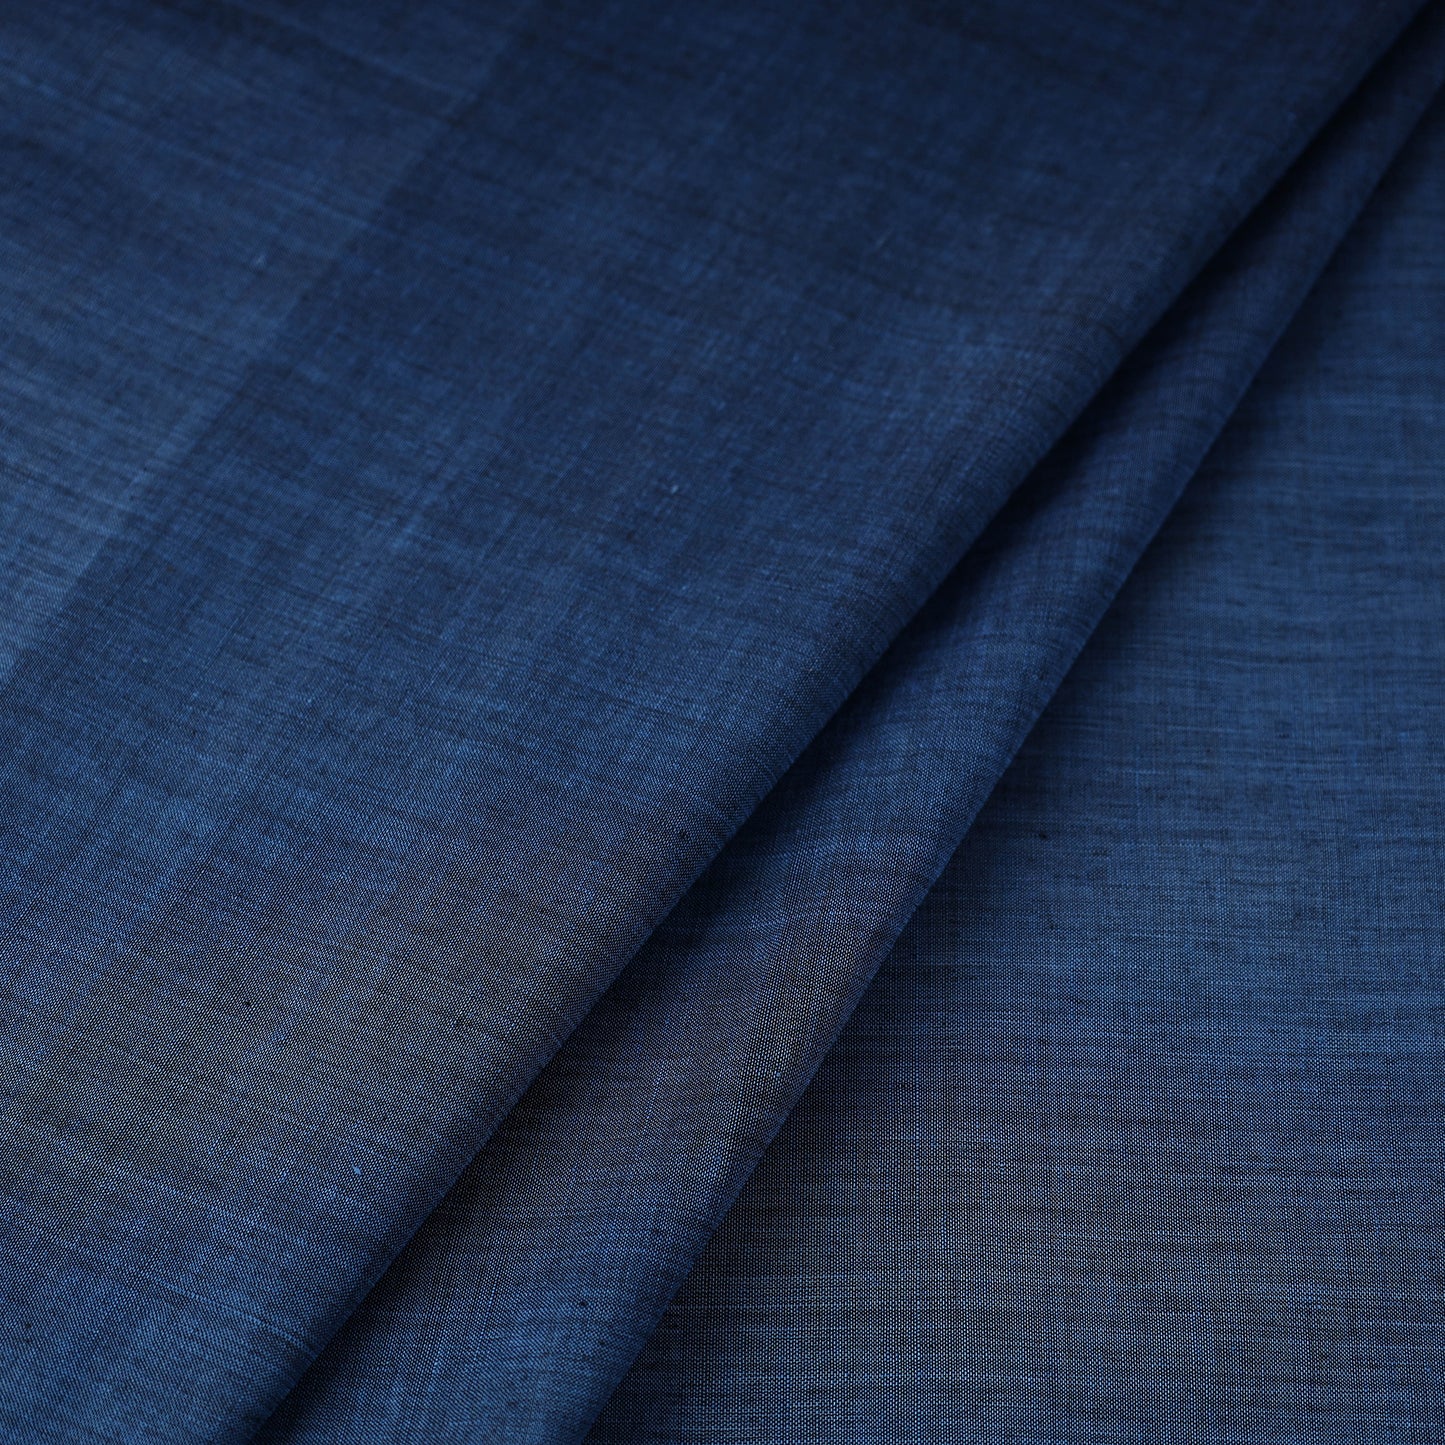 Blue - Mangalagiri Plain Handloom Cotton Fabric